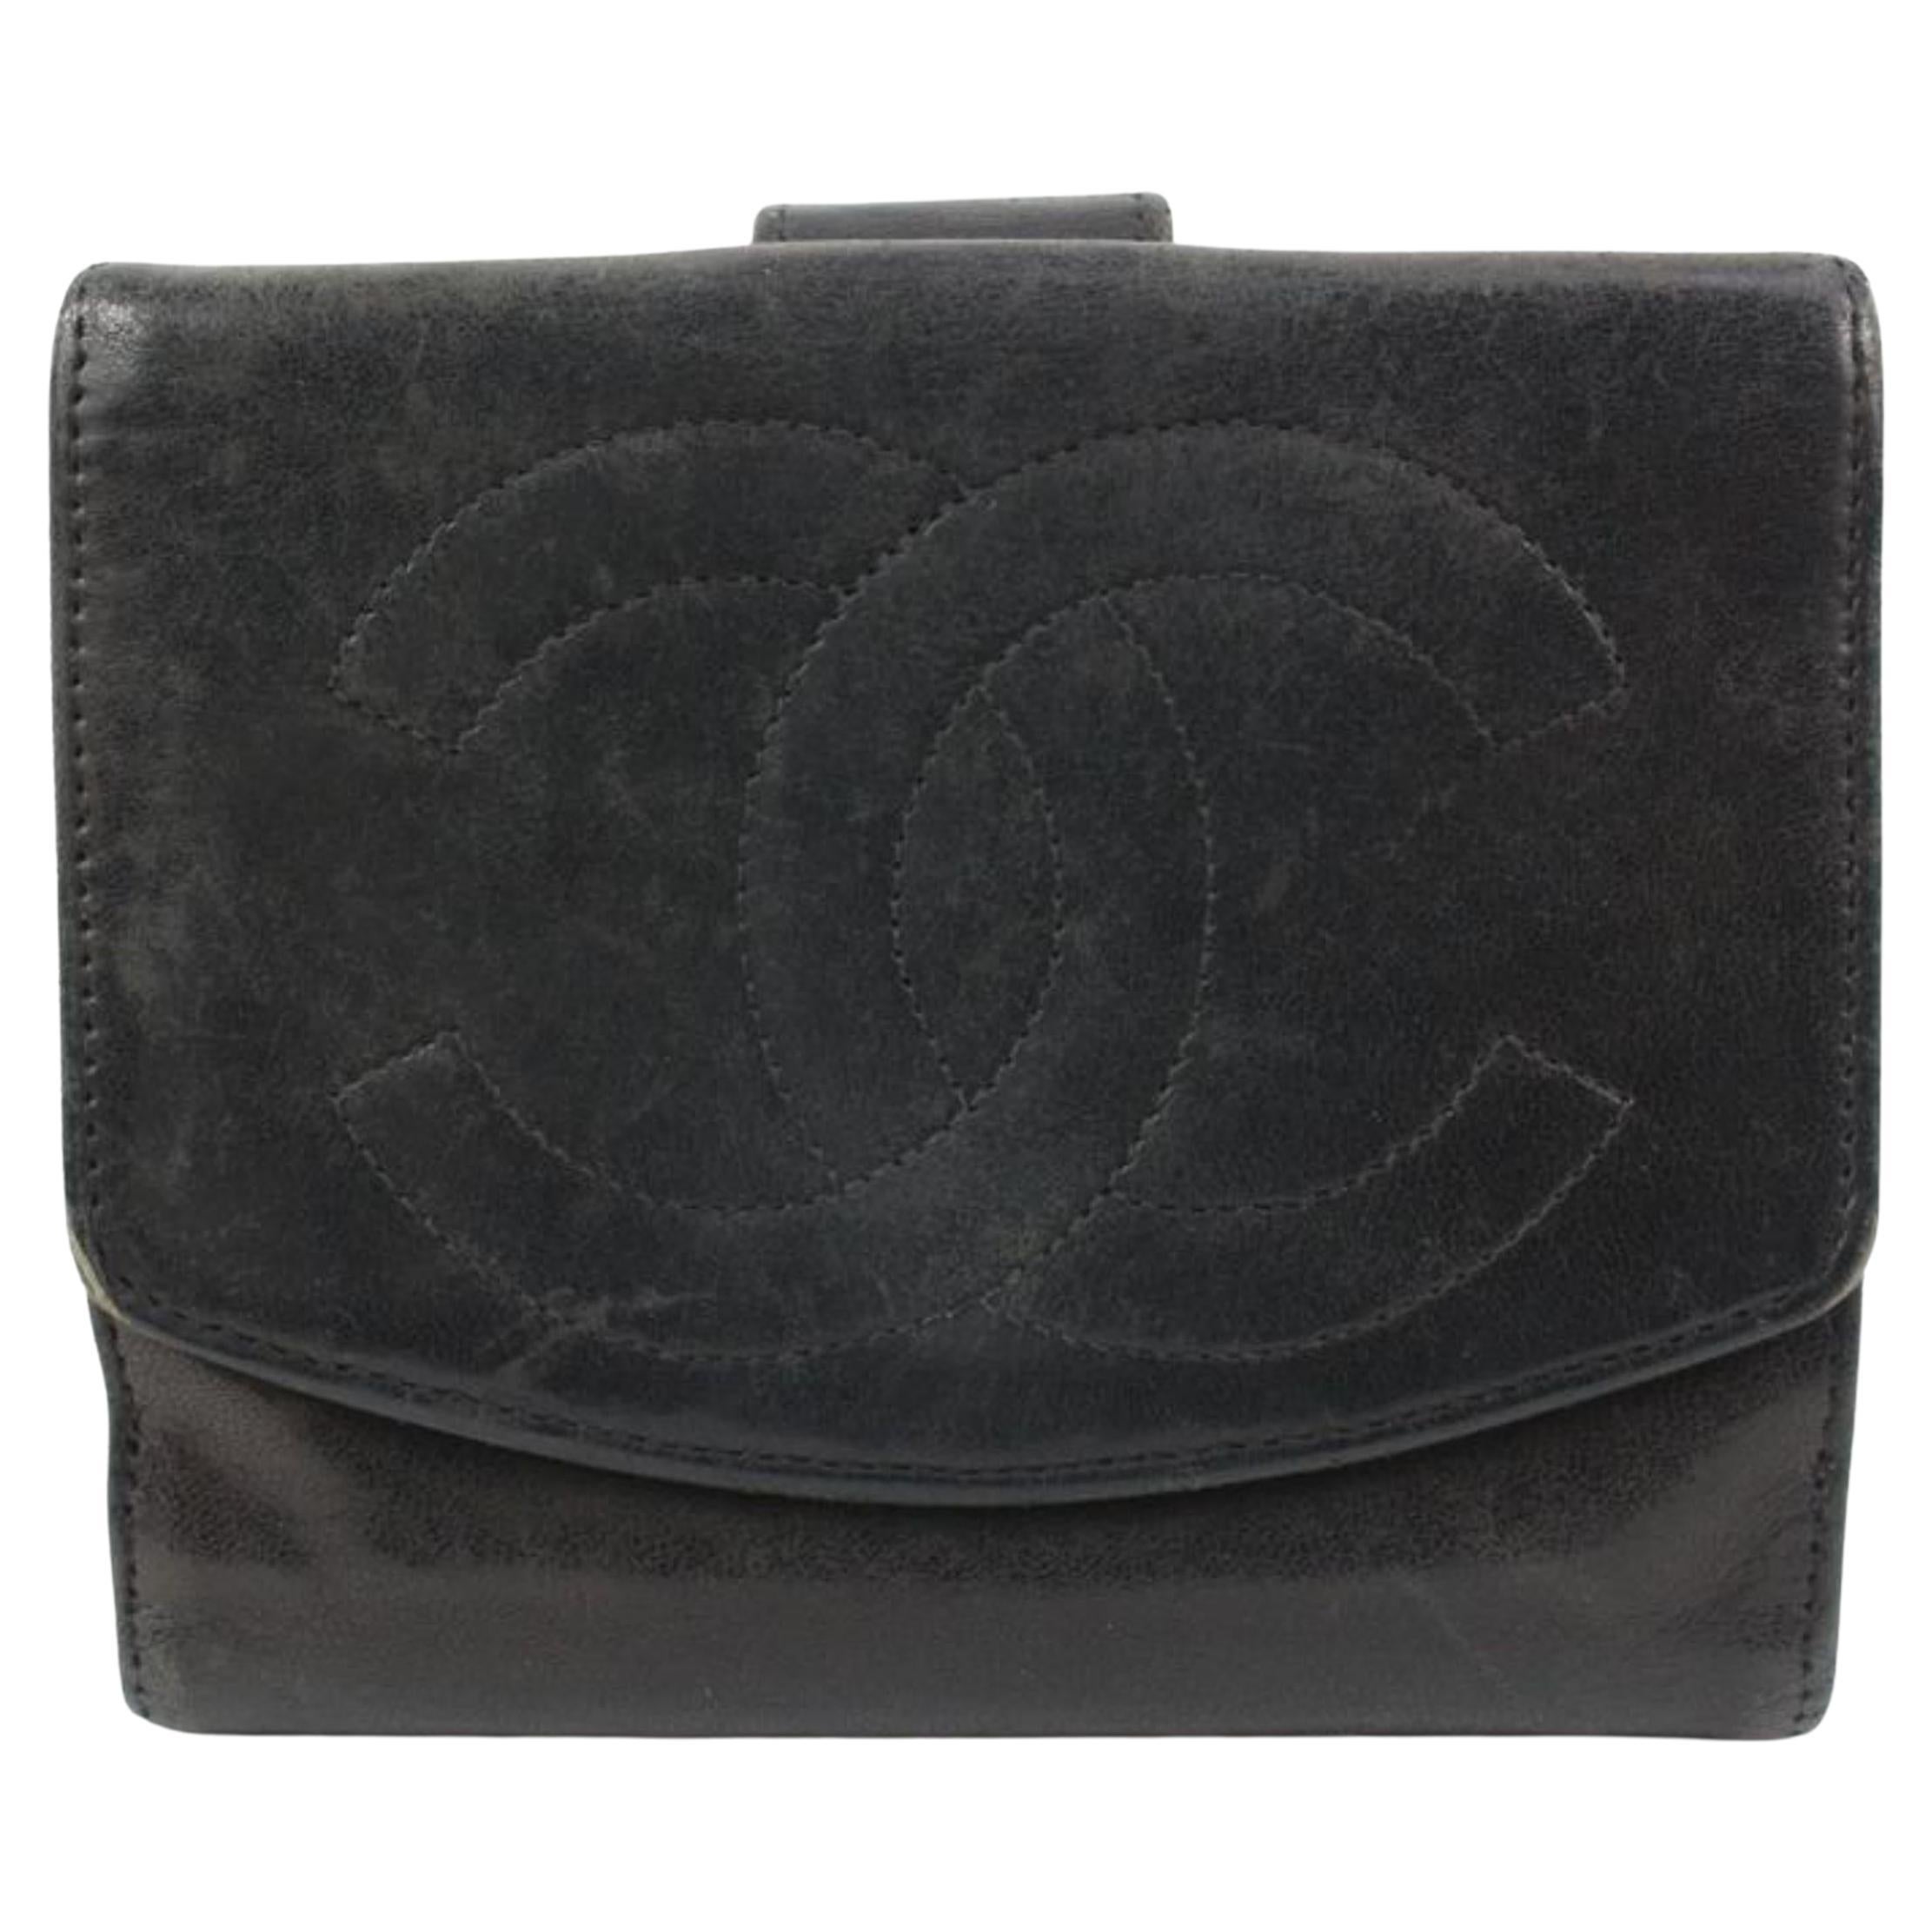 Chanel Black Lambskin CC Logo Coin Purse Change Pouch Wallet 17ck31s For Sale